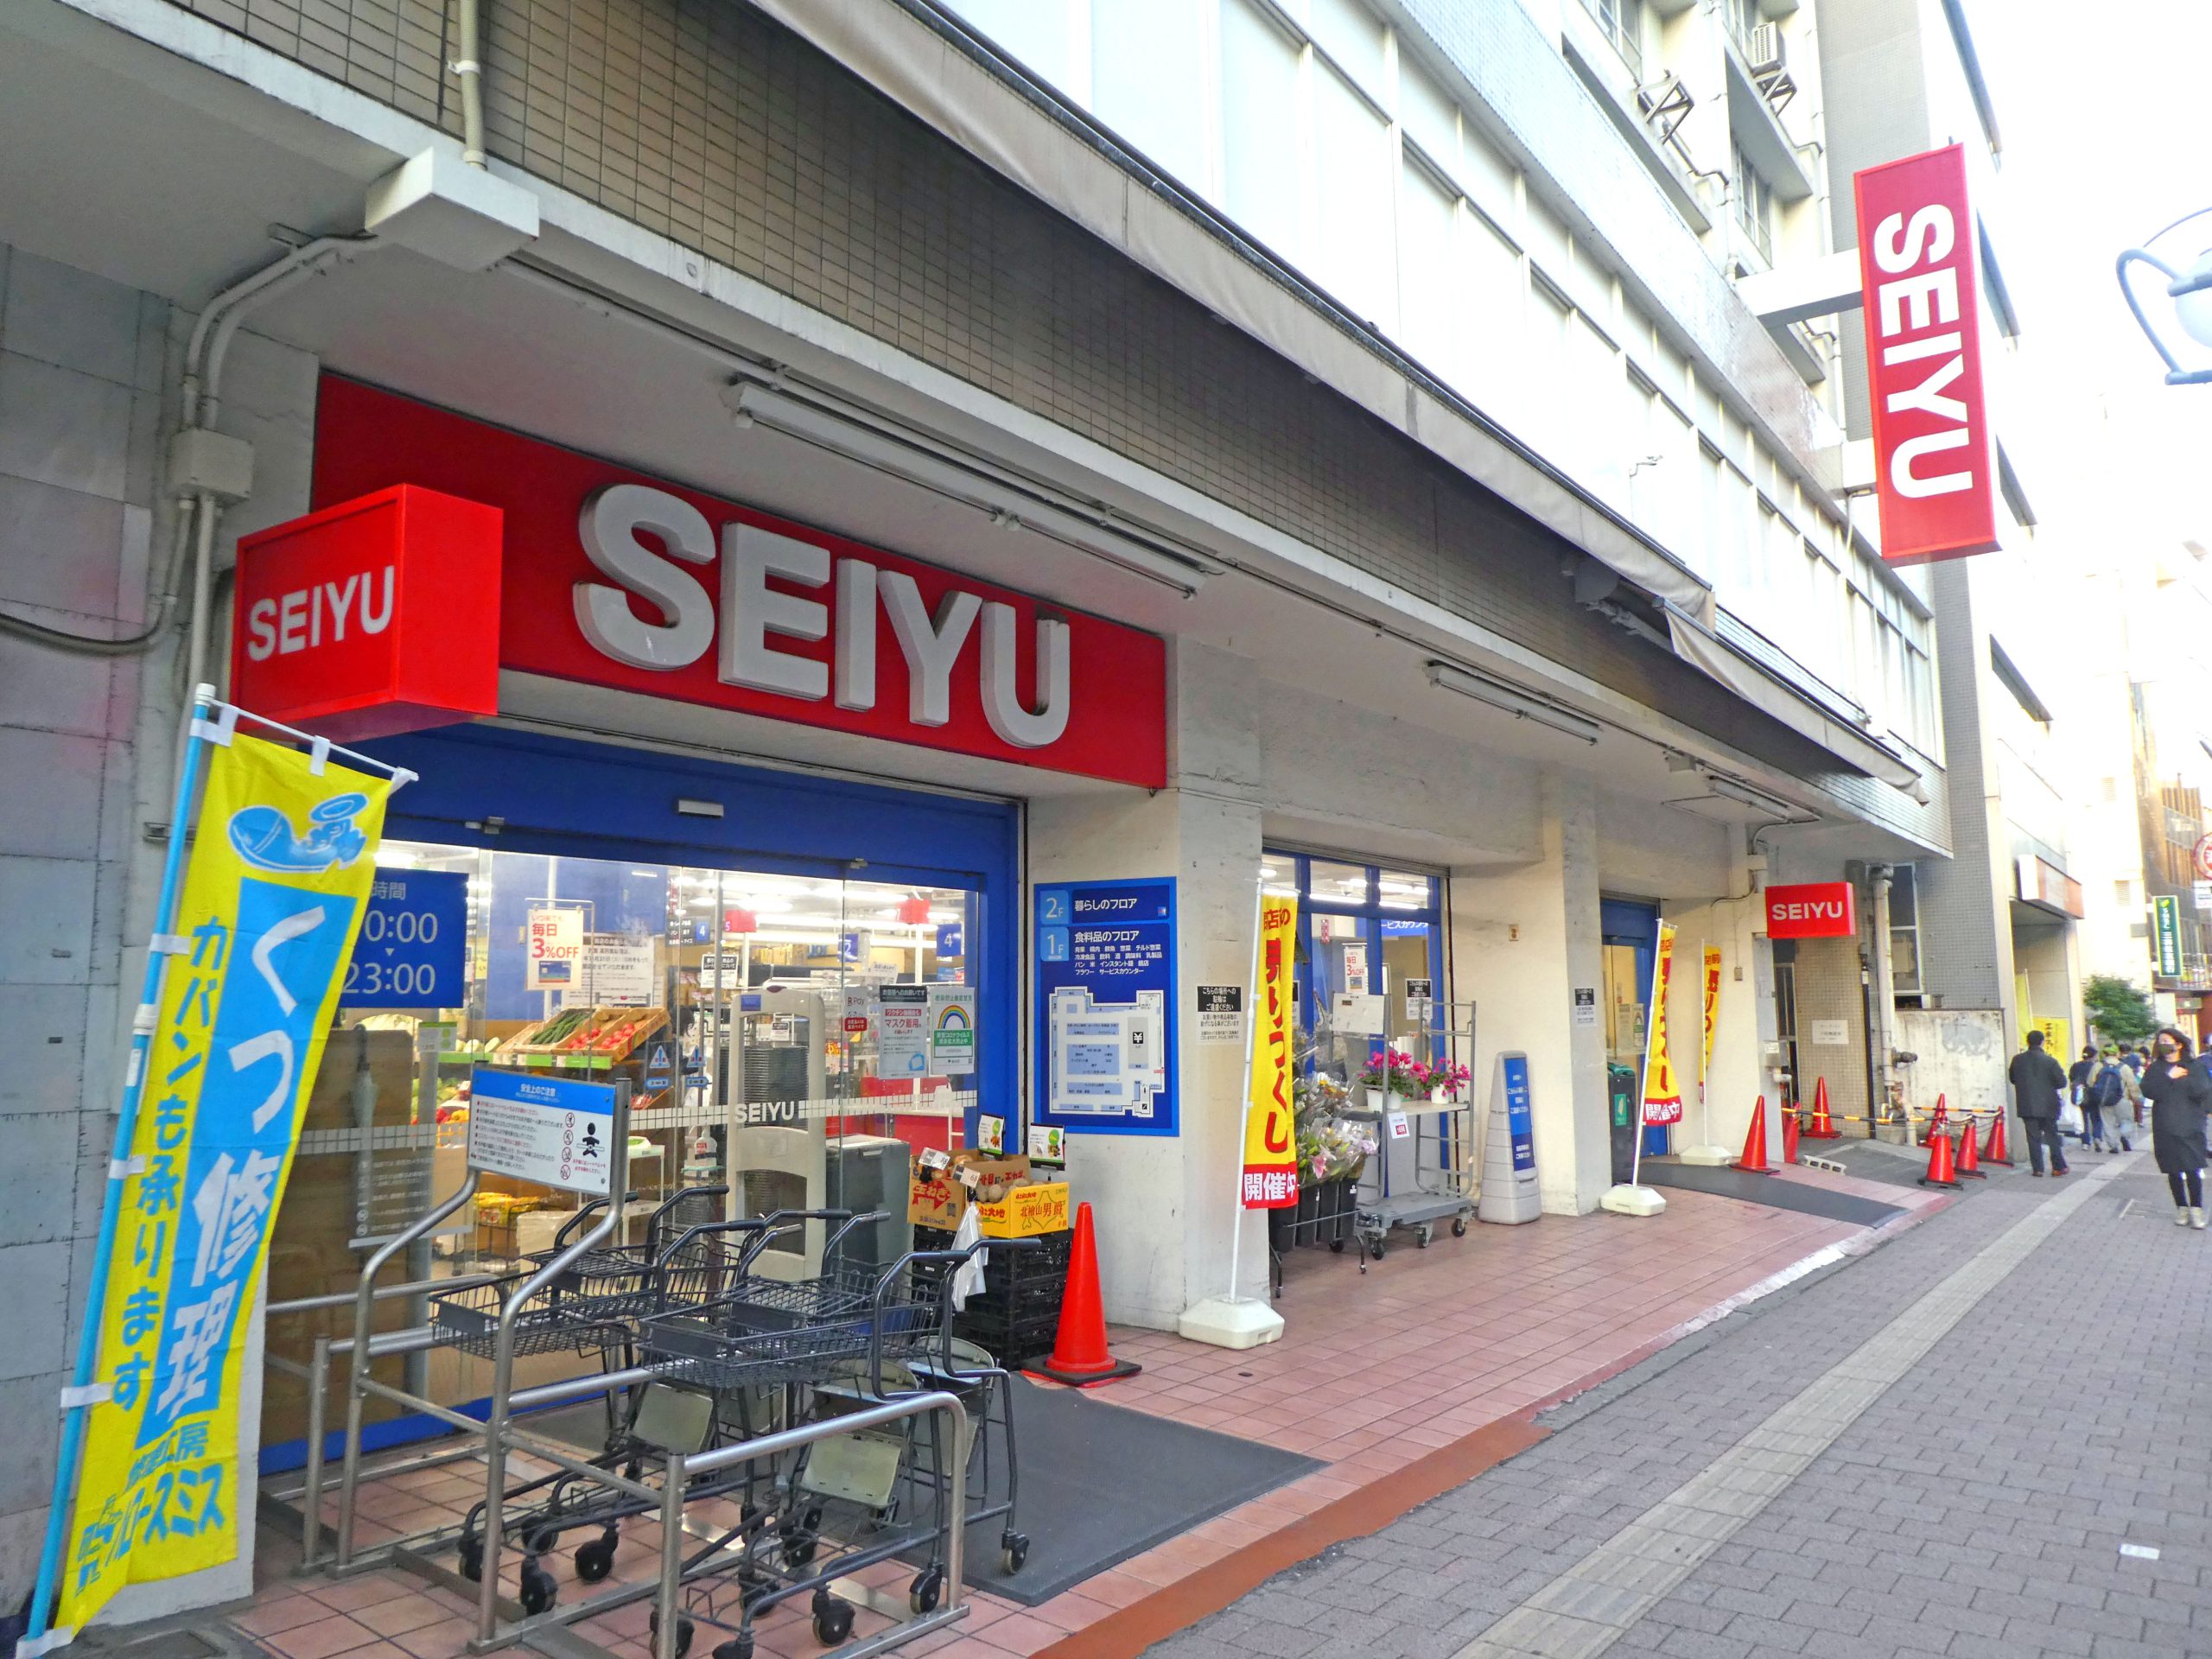 【閉店】 西友高田馬場店、2021年11月30日閉店−西友現存最古の店舗、59年の歴史に幕